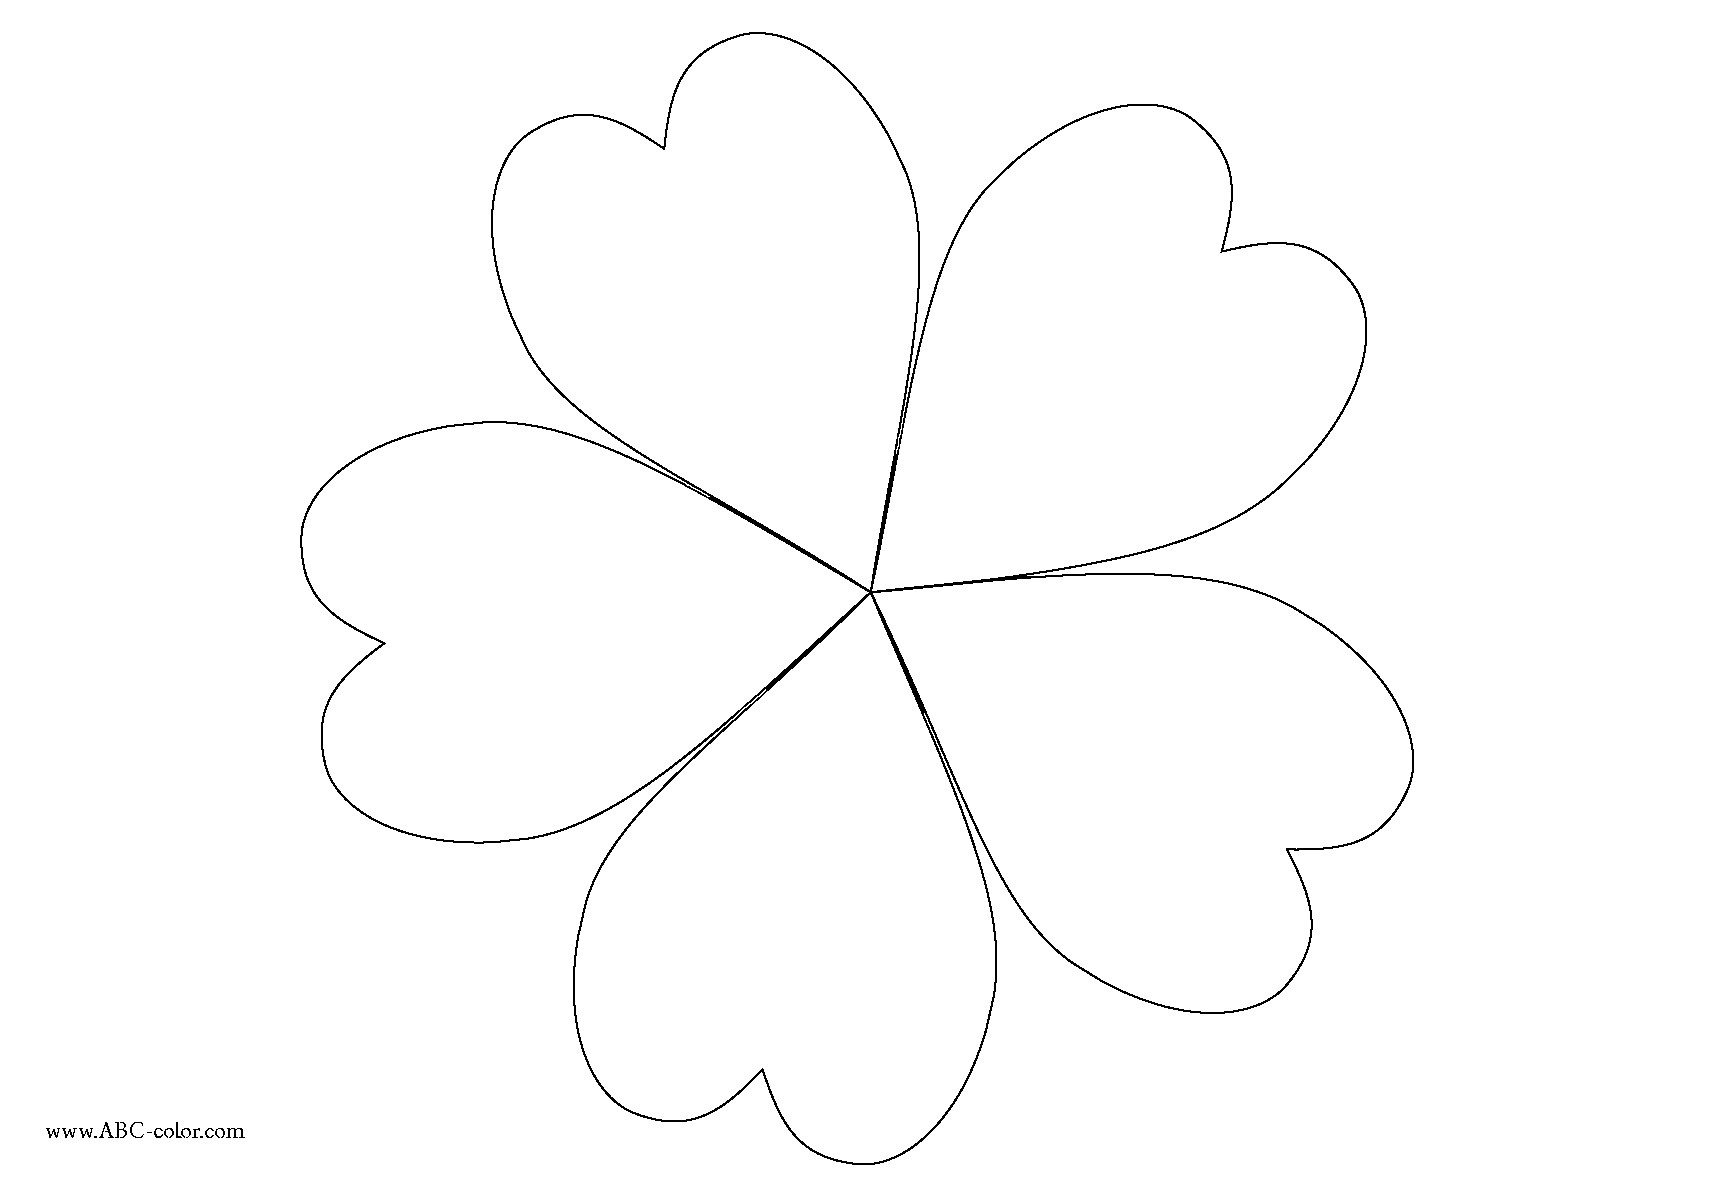 Flower Petal Drawing - ClipArt Best